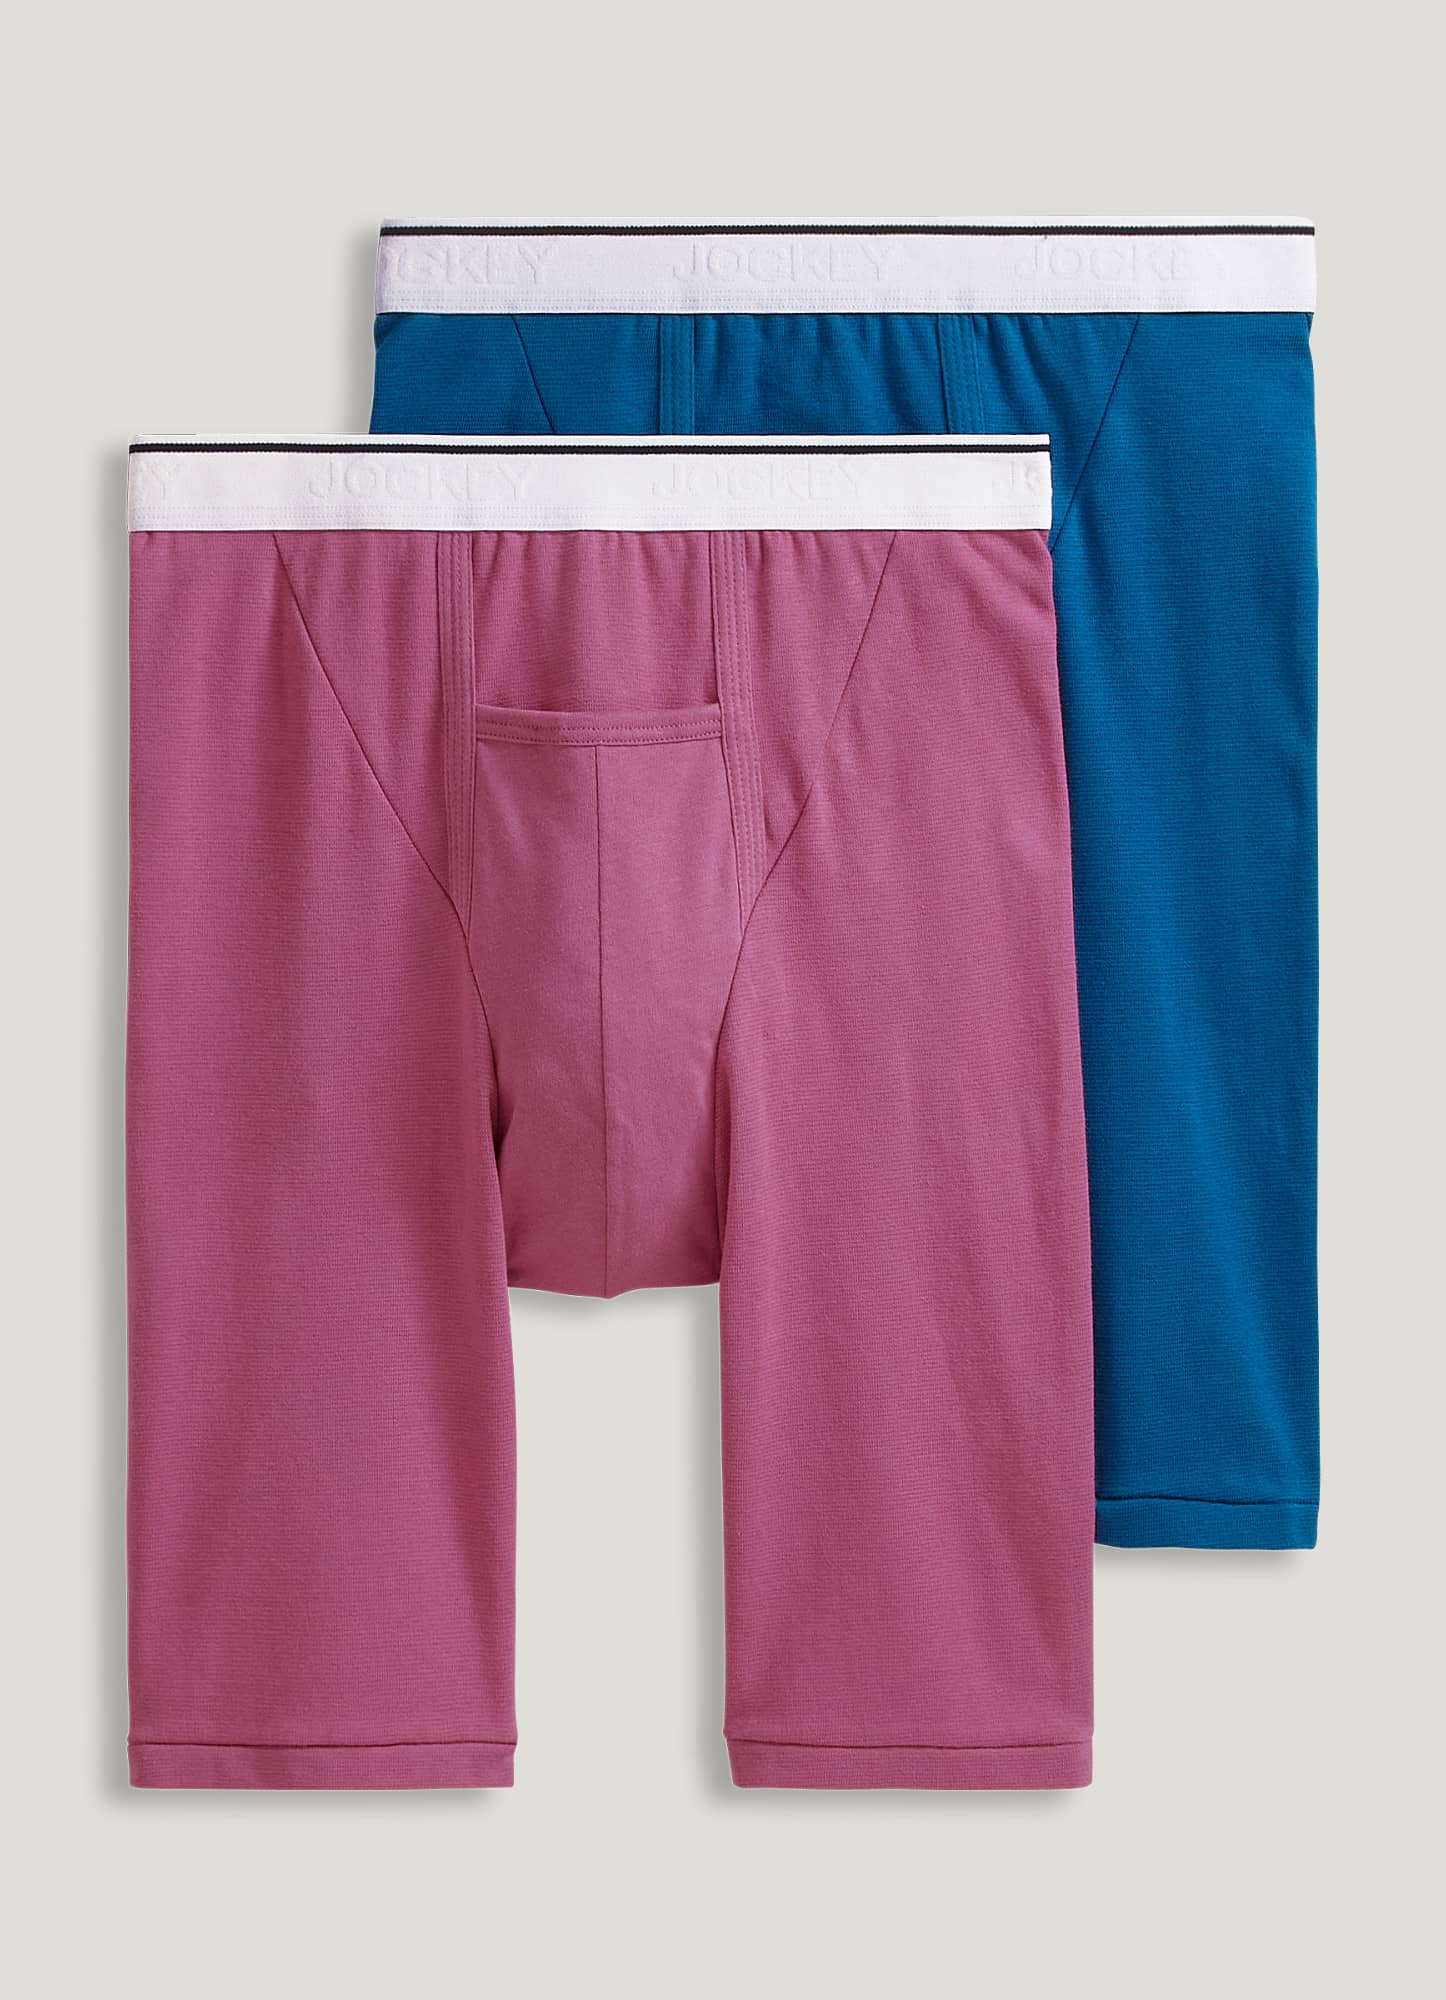 Men's Sexy Breathe Holes Underwear Jockstrap Briefs Size S~xxxl